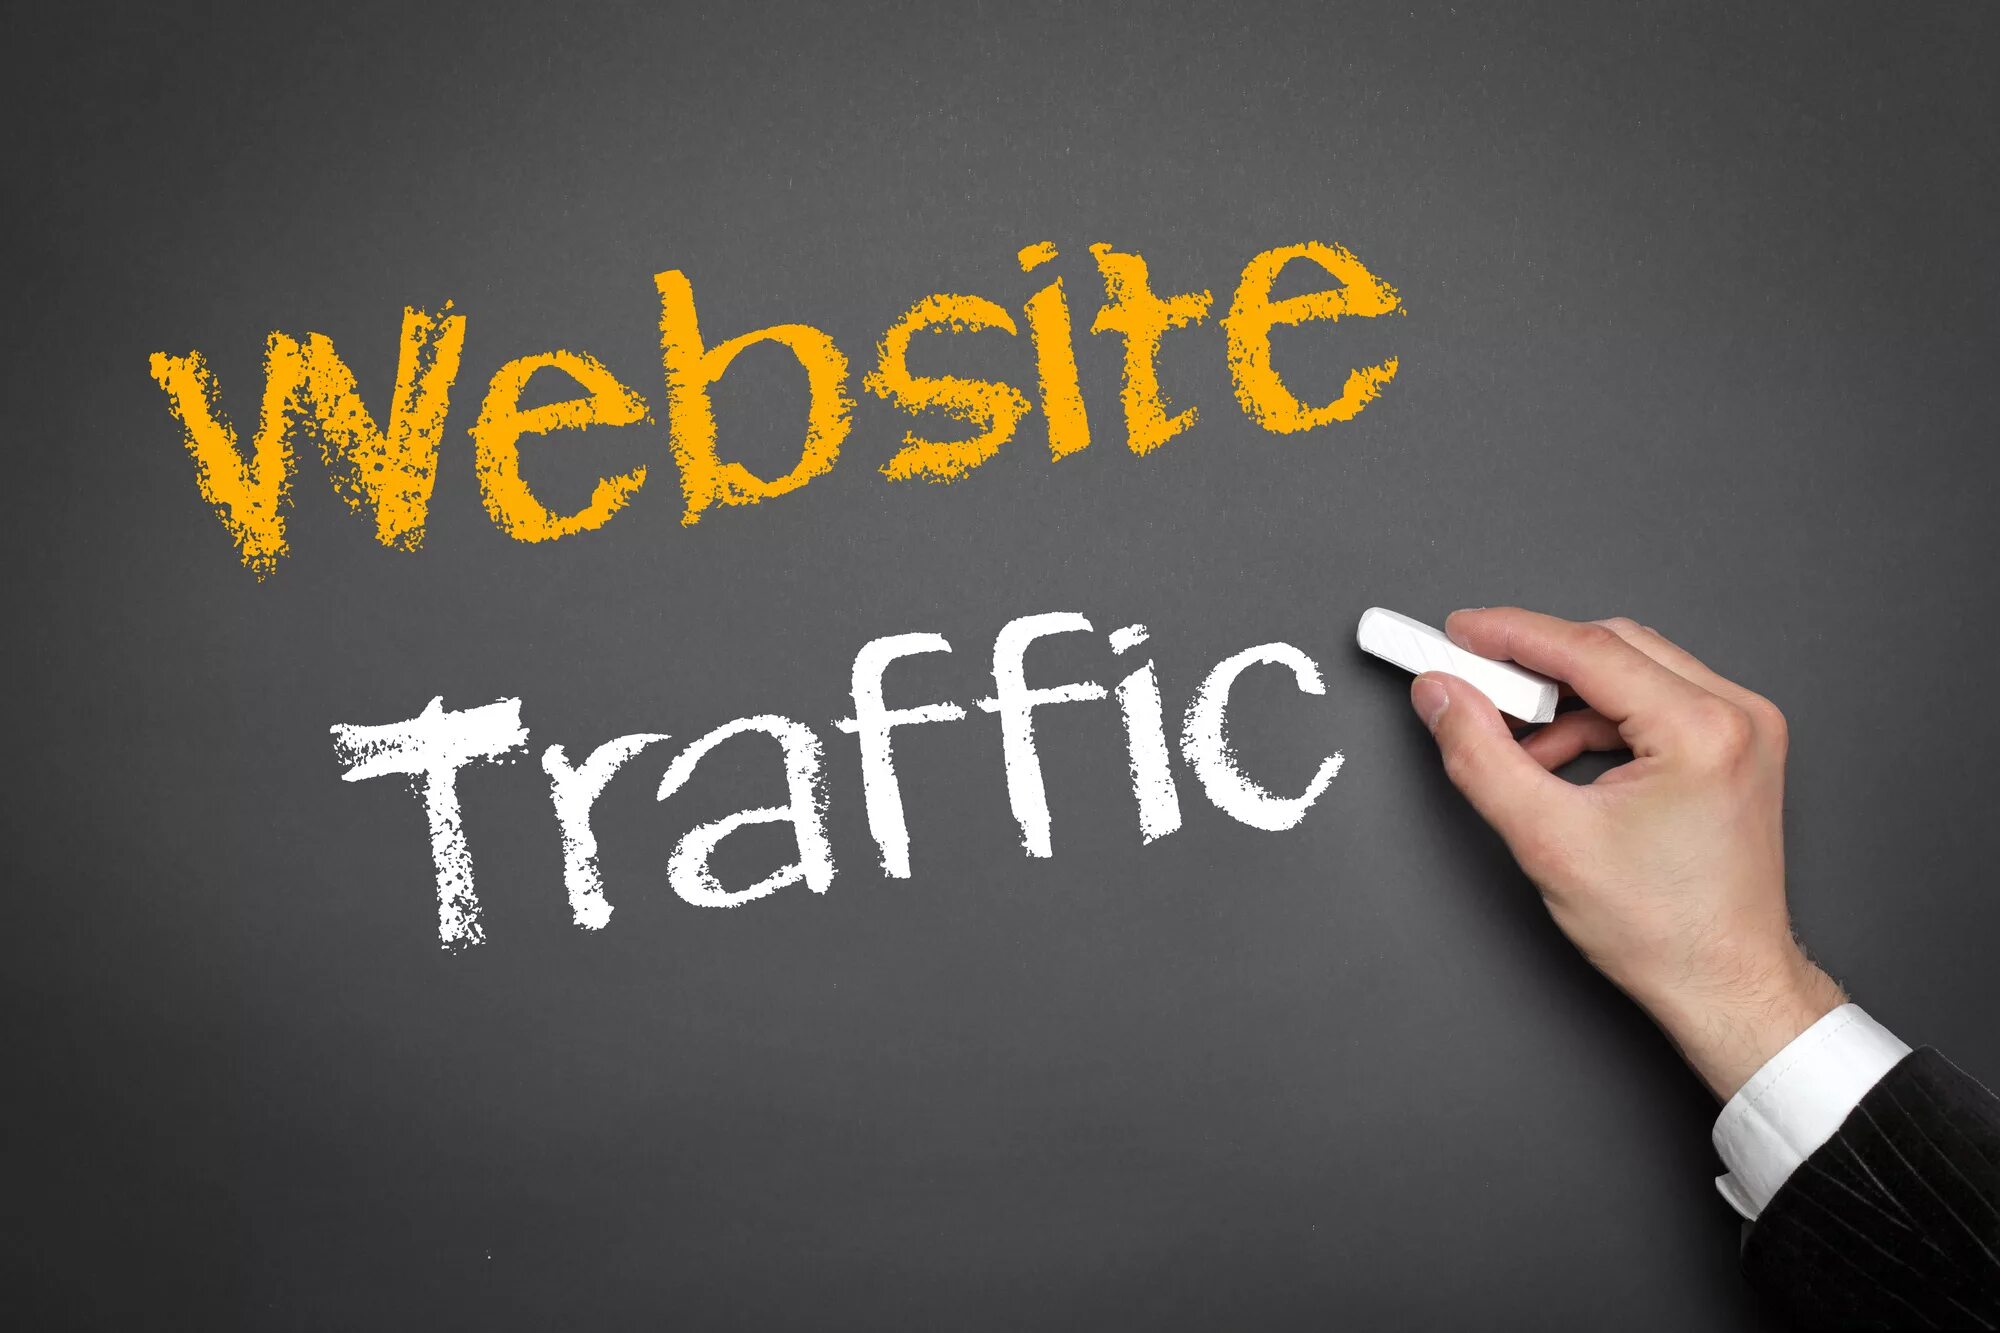 Website traffic. SEO трафик. Картинка SEO И трафик. Трафик на блог.